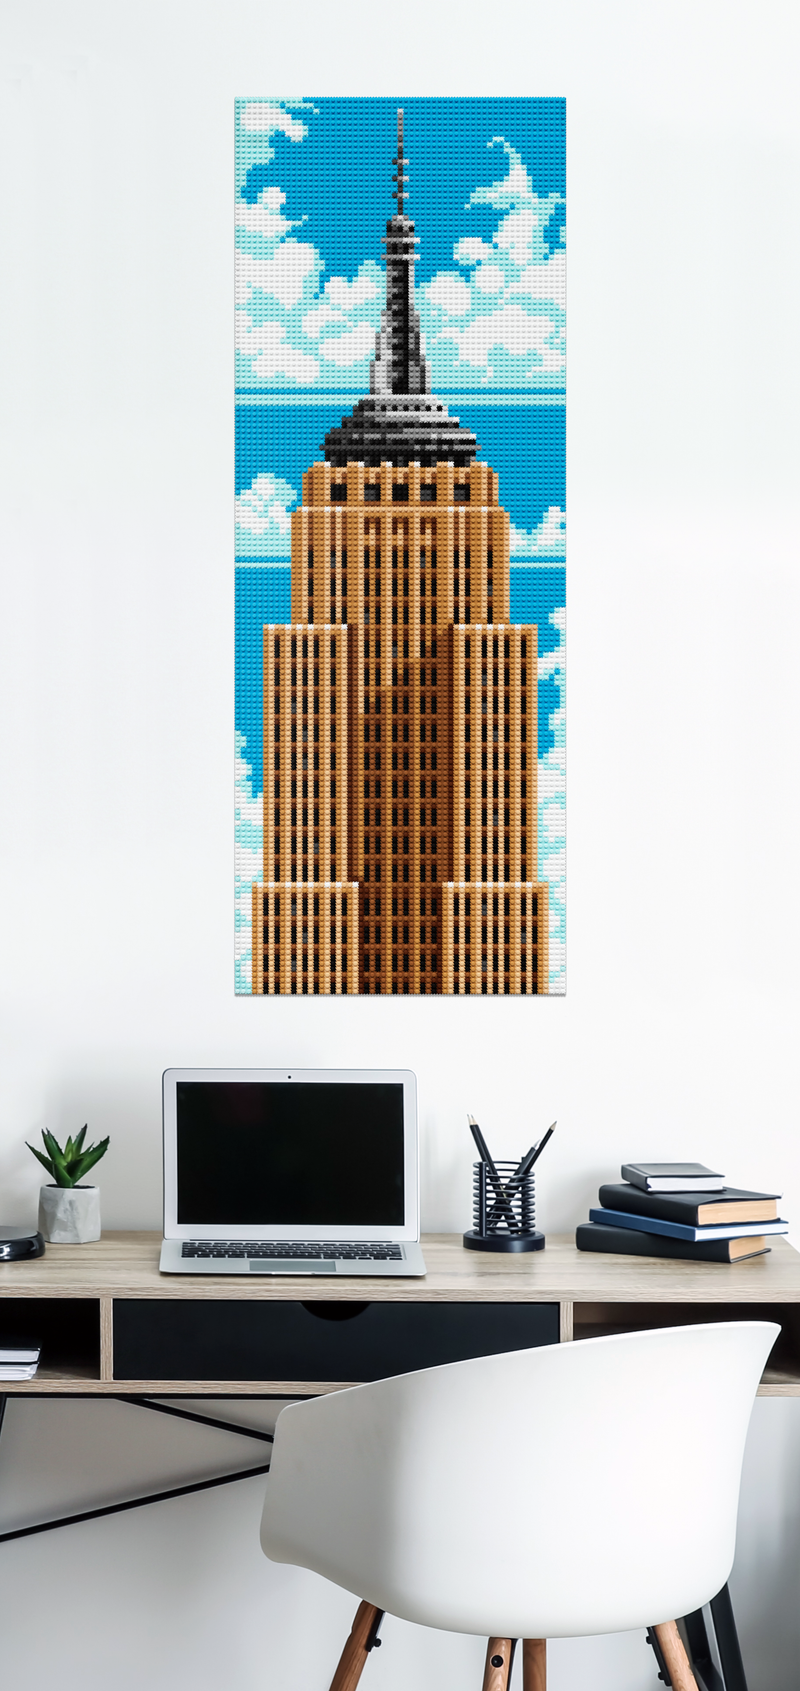 Empire State Building Pixel Puzzle